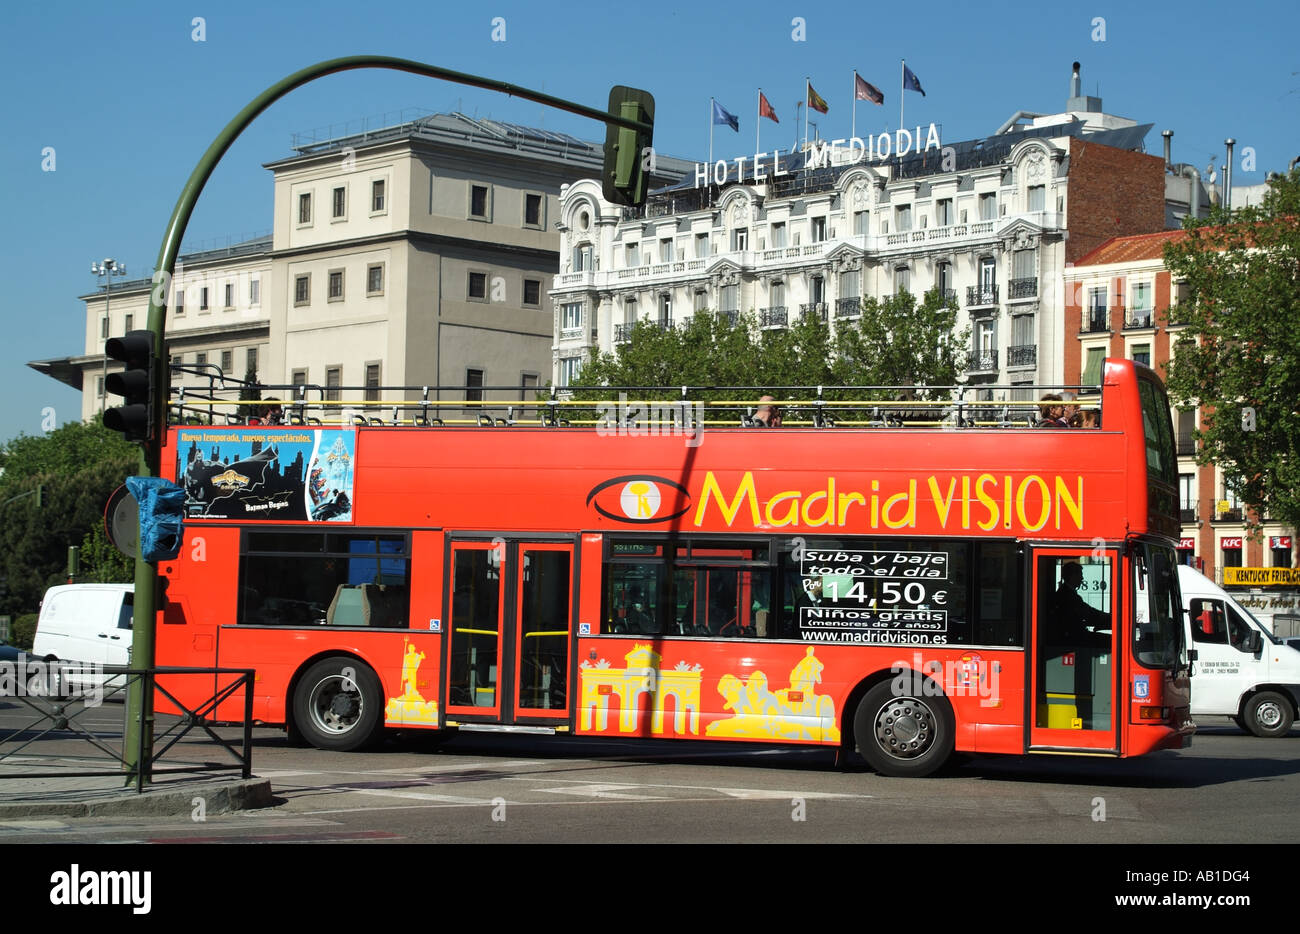 Madrid vision tourbus a hop on hop off ride around the city. Madrid Spain Europe EU Stock Photo